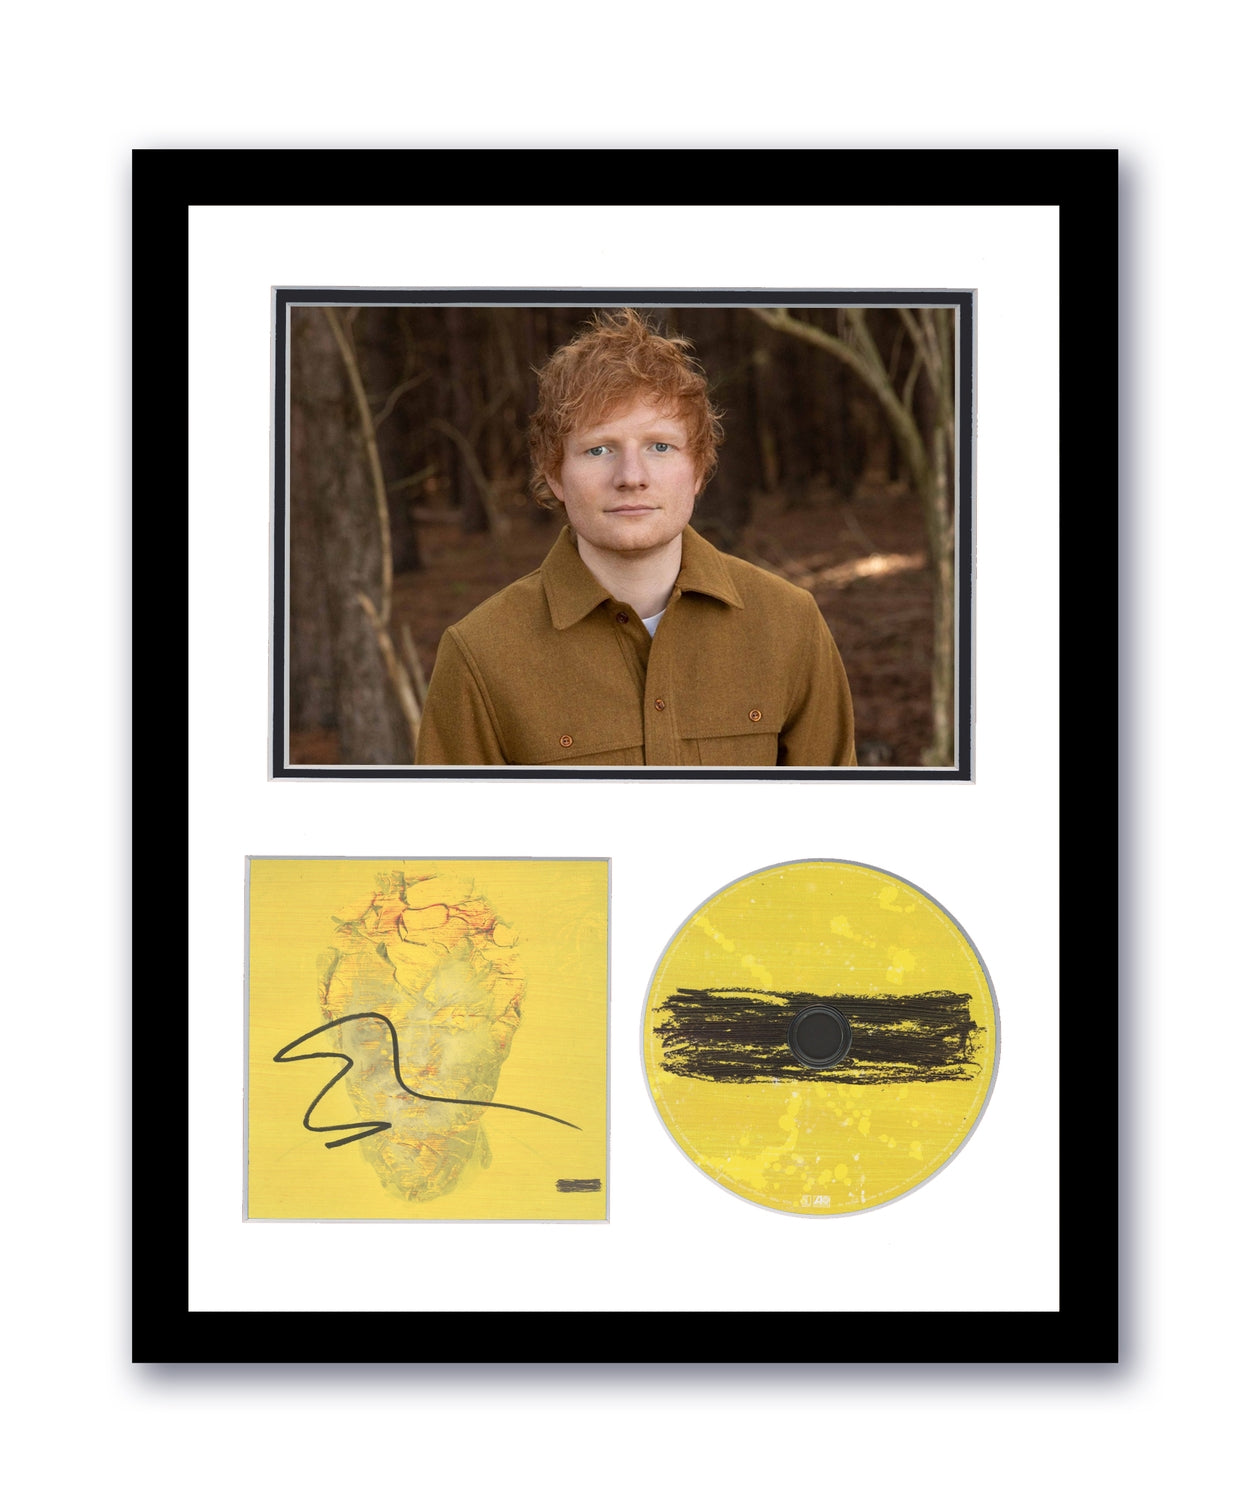 Ed Sheeran Signed 11x14 Framed Photo CD Subtract Autographed ACOA #1